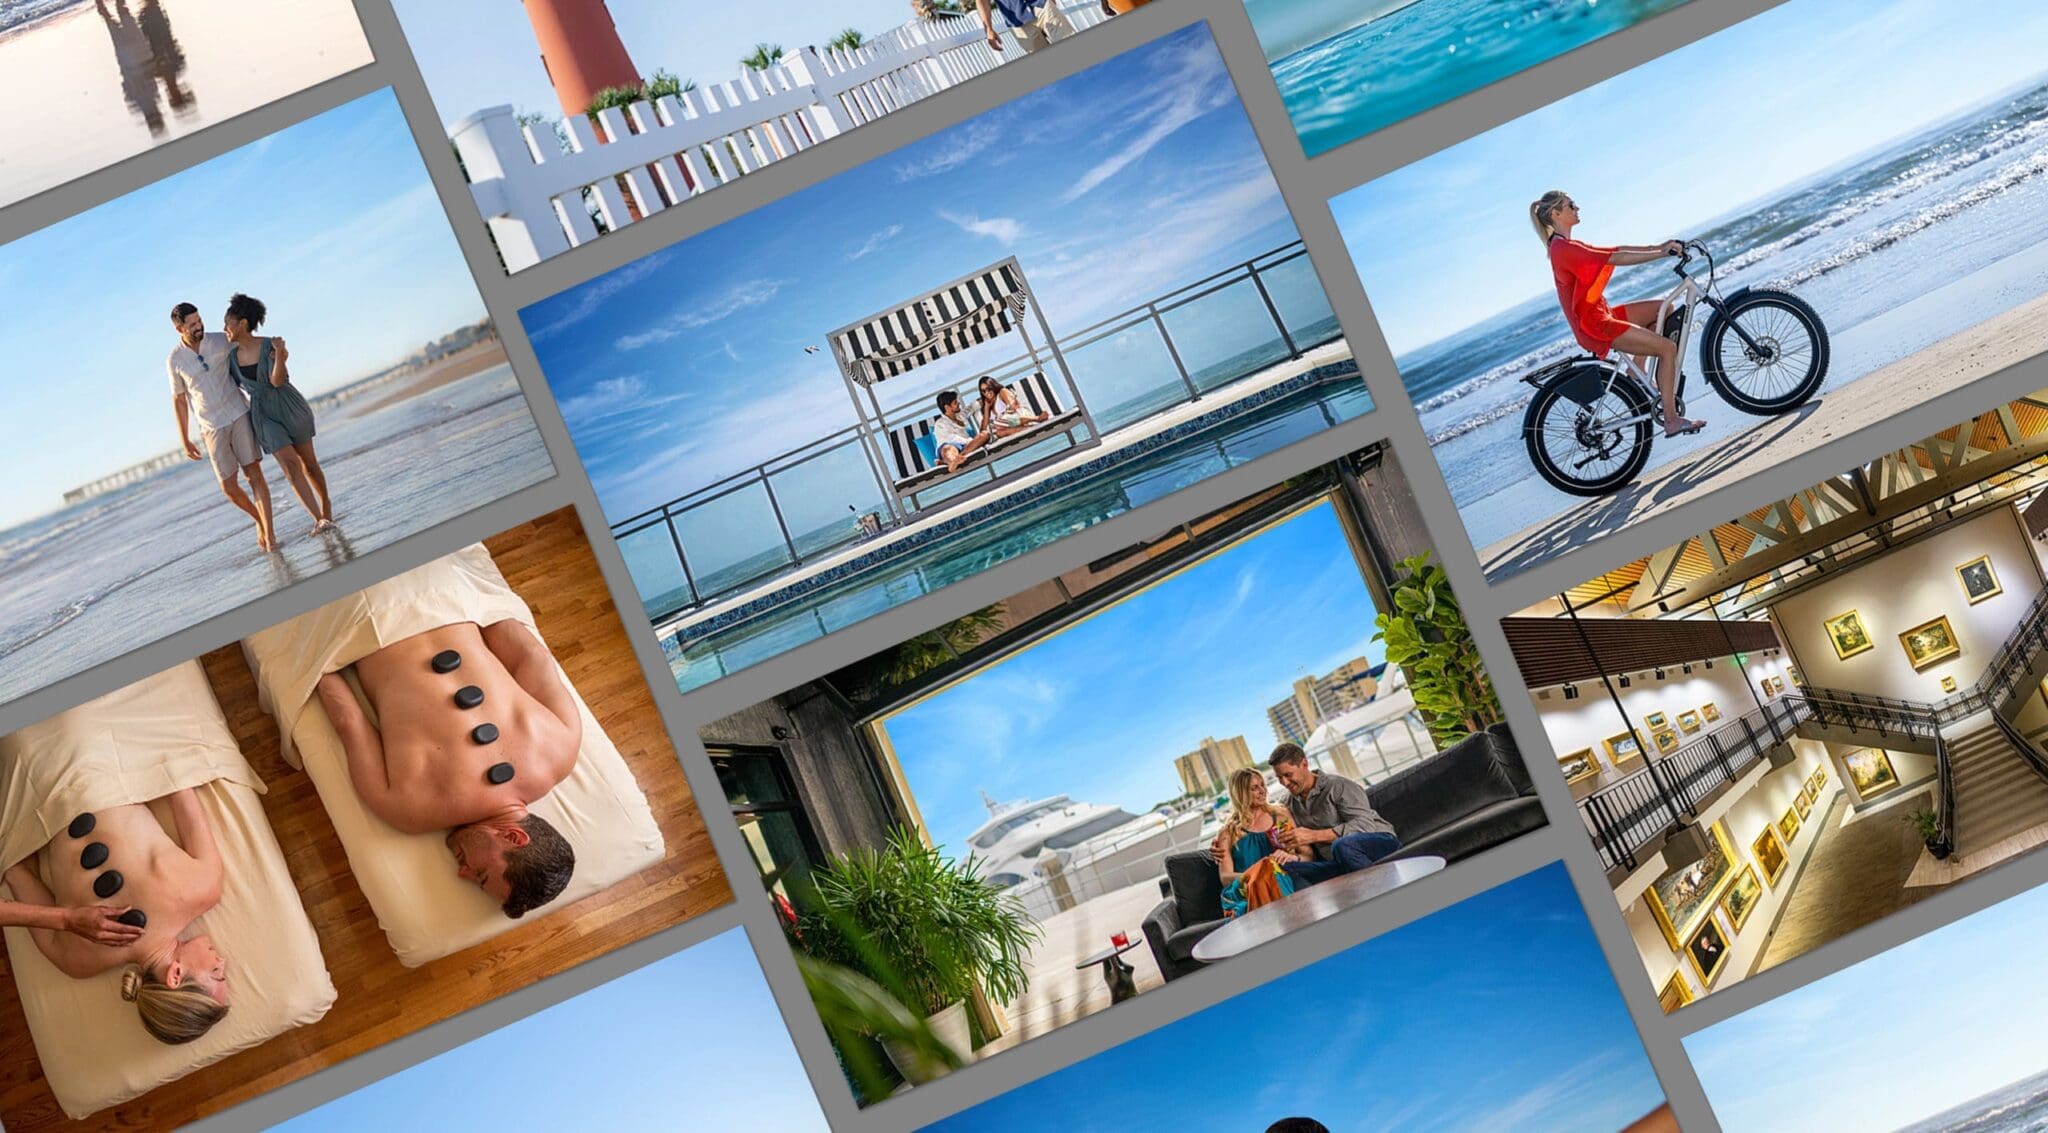 Daytona Beach photo grid